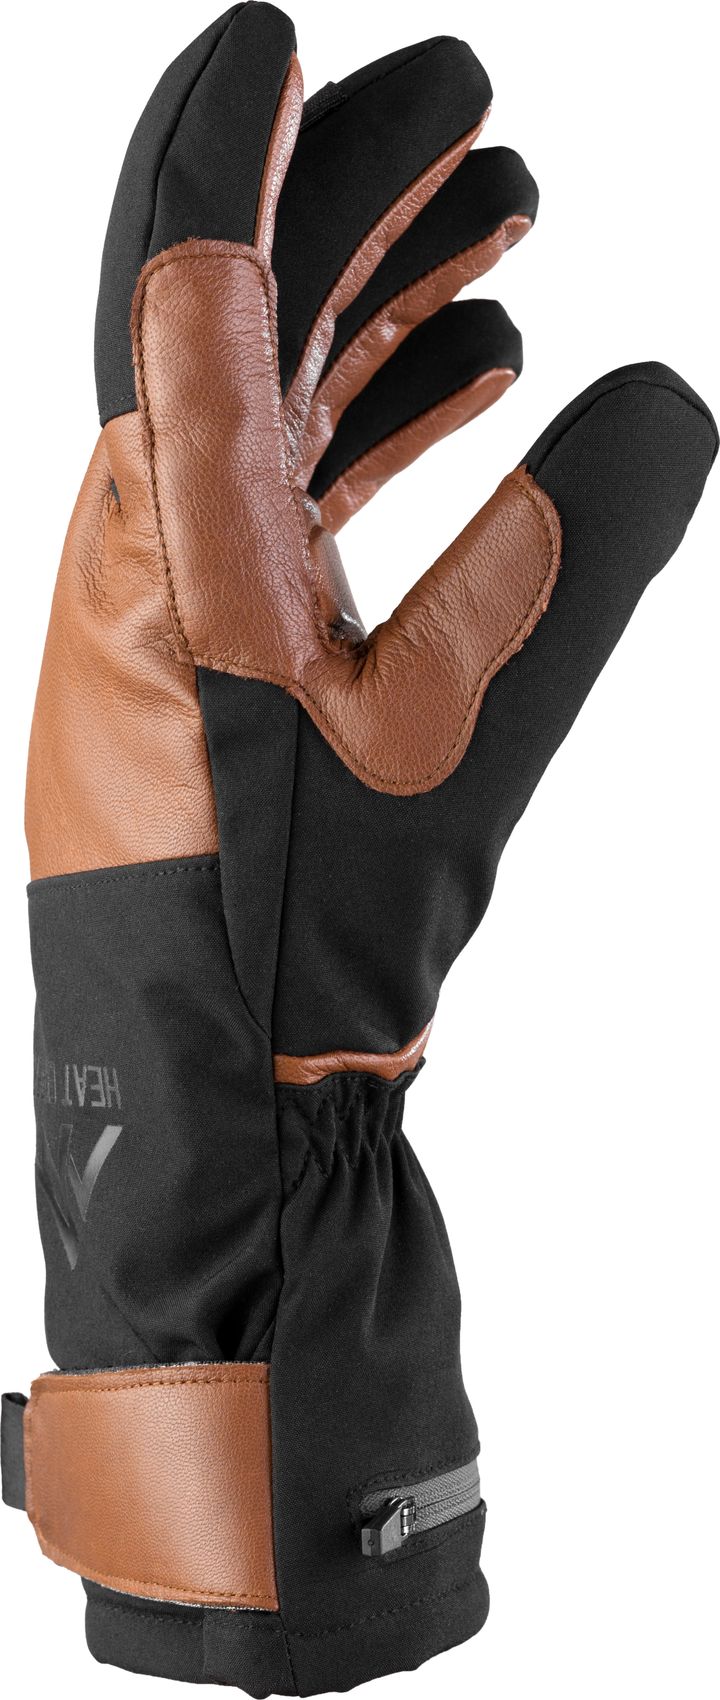 Heated Outdoor Gloves Black Heat Experience